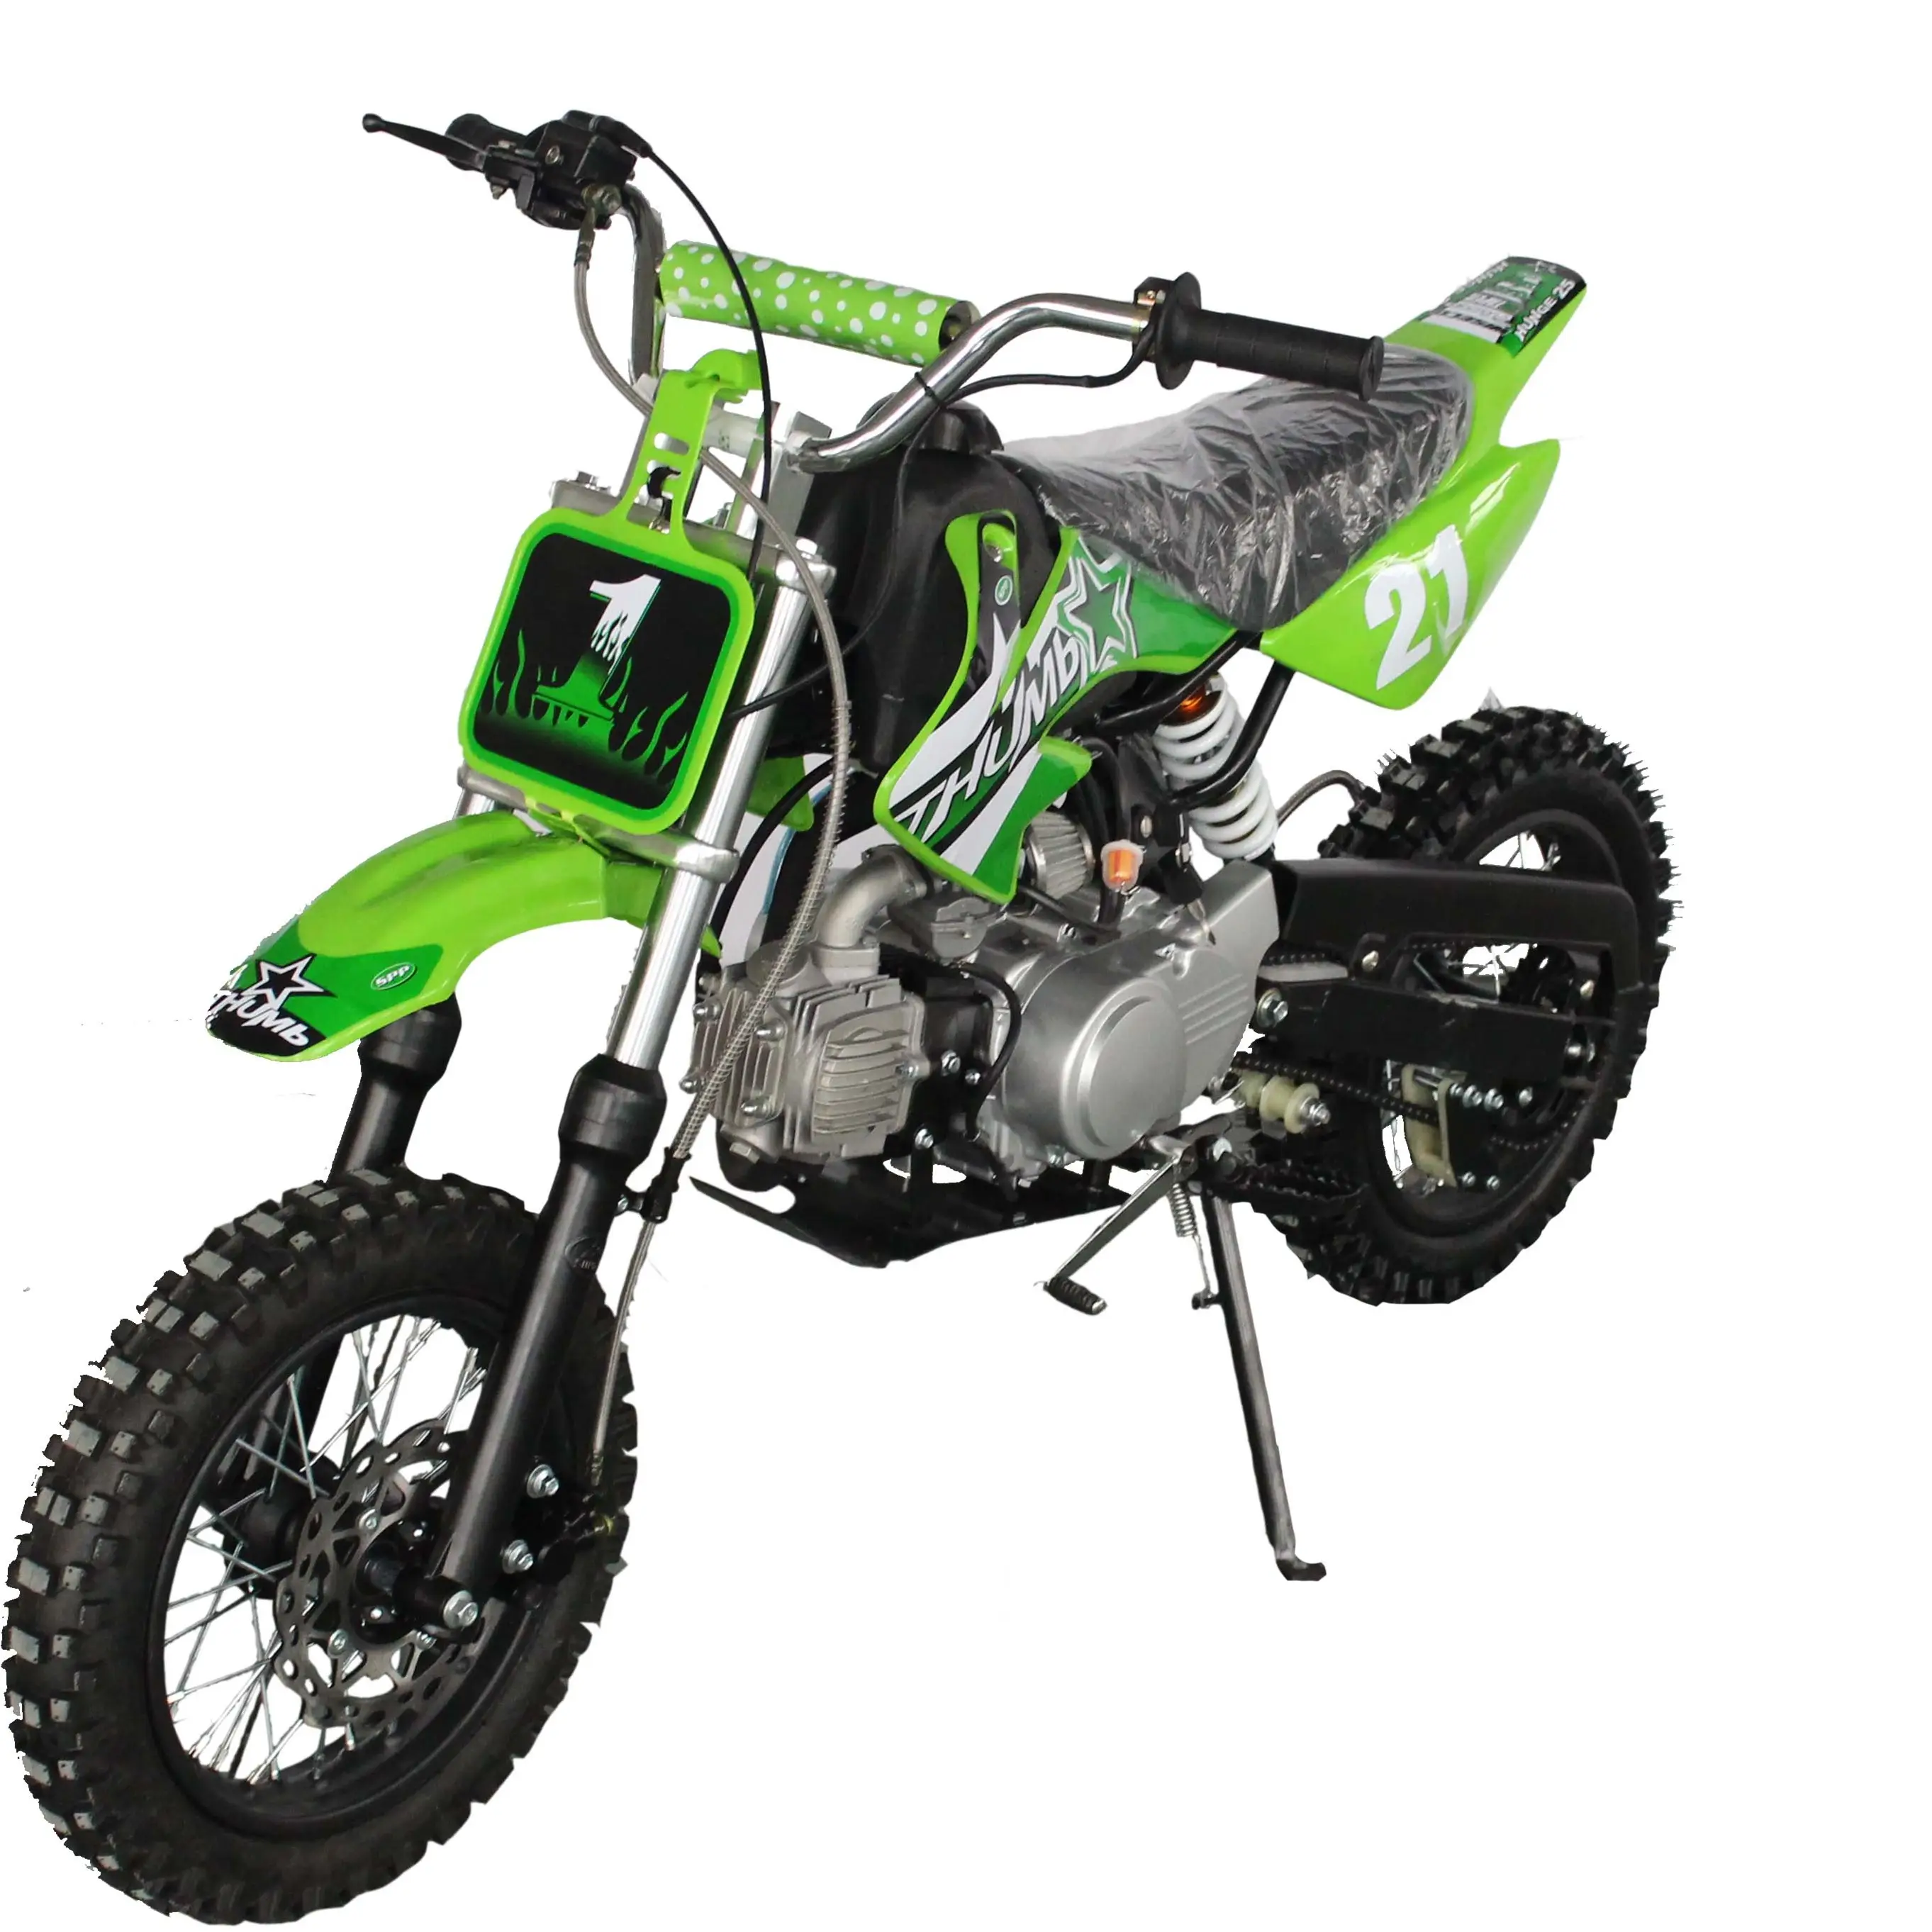 1250cc dirt bike Cross-country motorcycle automatic dirt bike for adults automatic dirt bikes